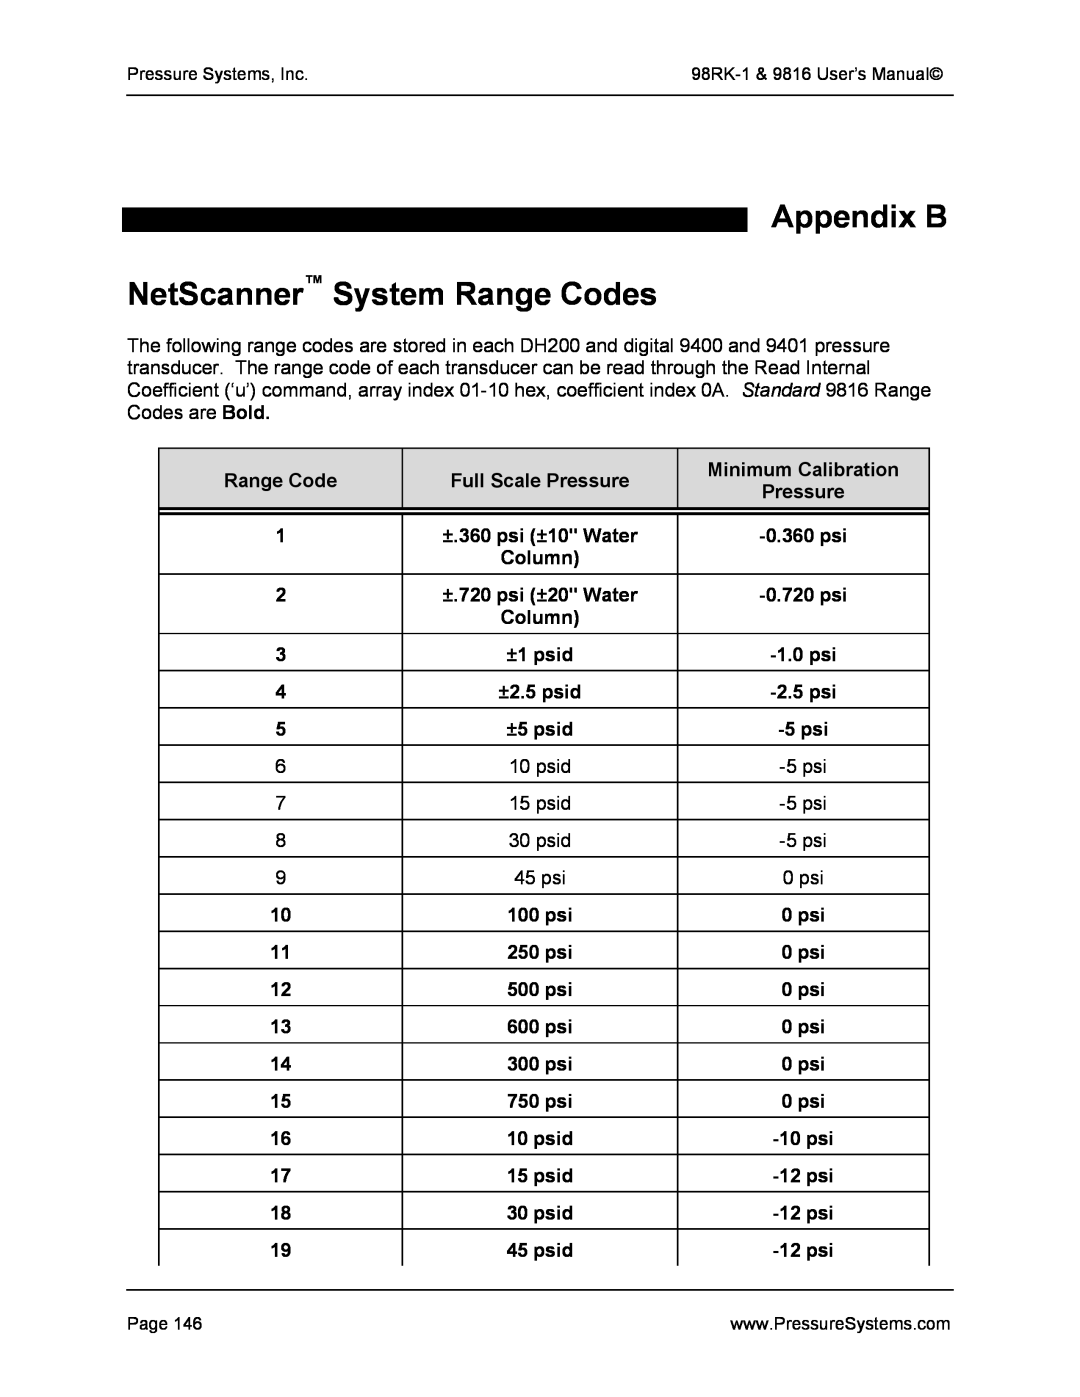 Pressure Systems 98RK-1 Appendix B NetScanner System Range Codes, Full Scale Pressure, Minimum Calibration, 0.360 psi 